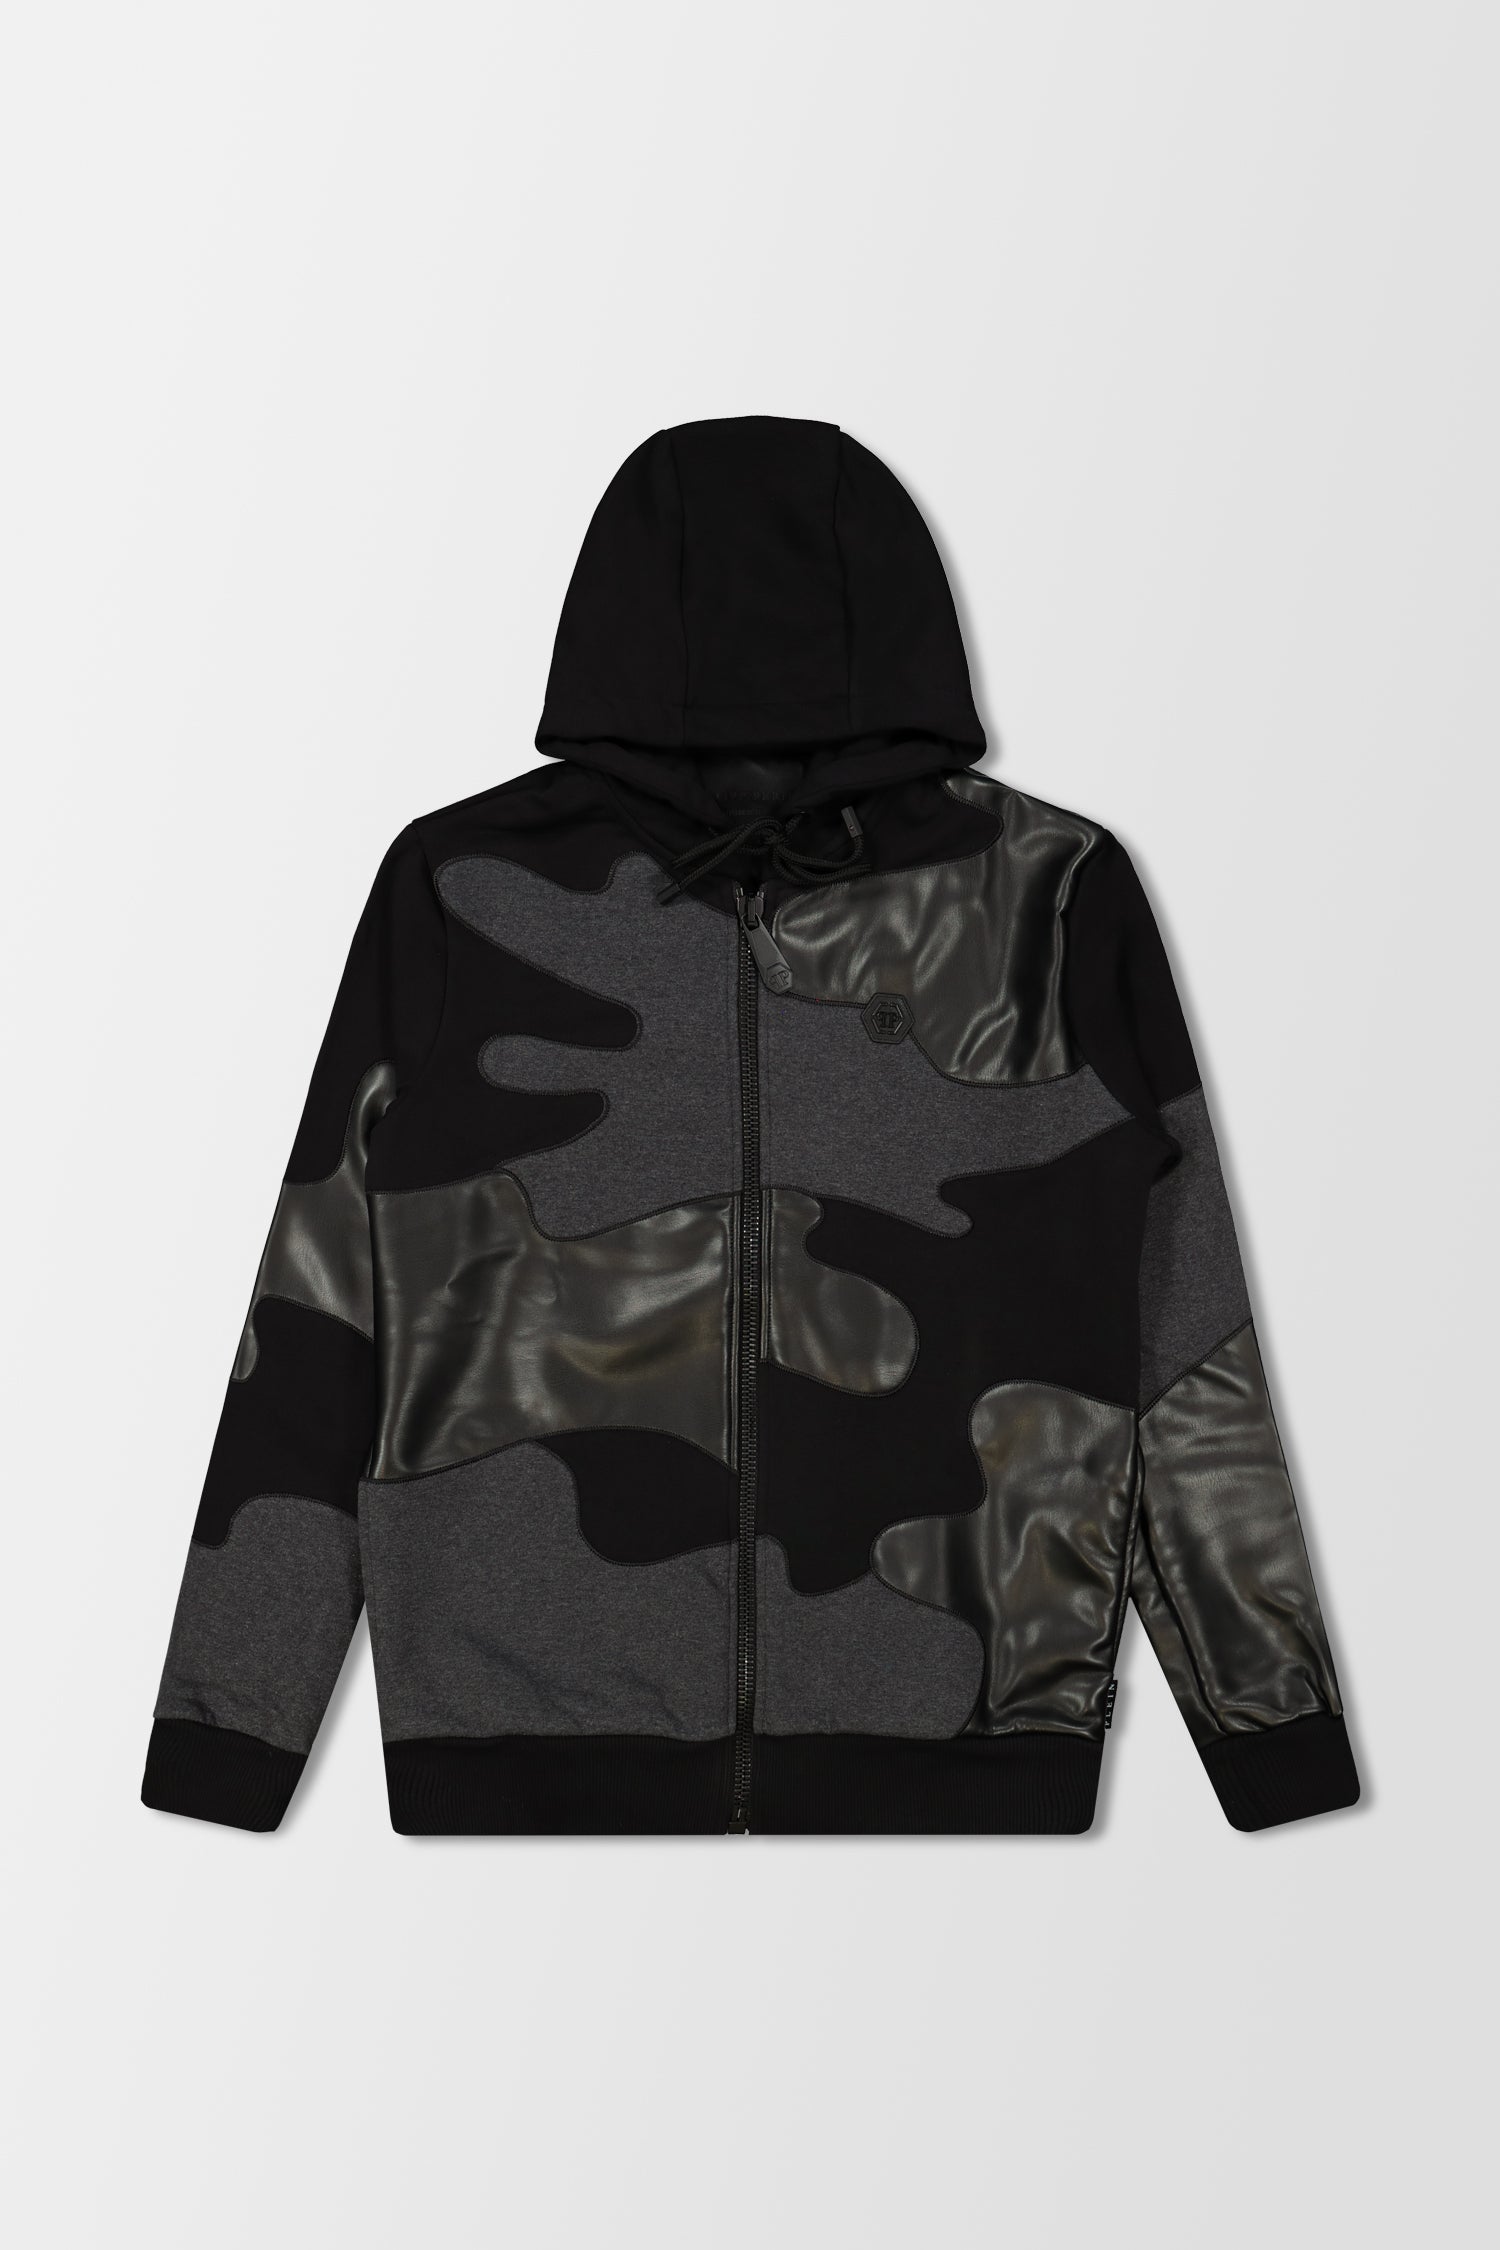 Philipp Plein Camouflage Black Hoodie Sweatjacket